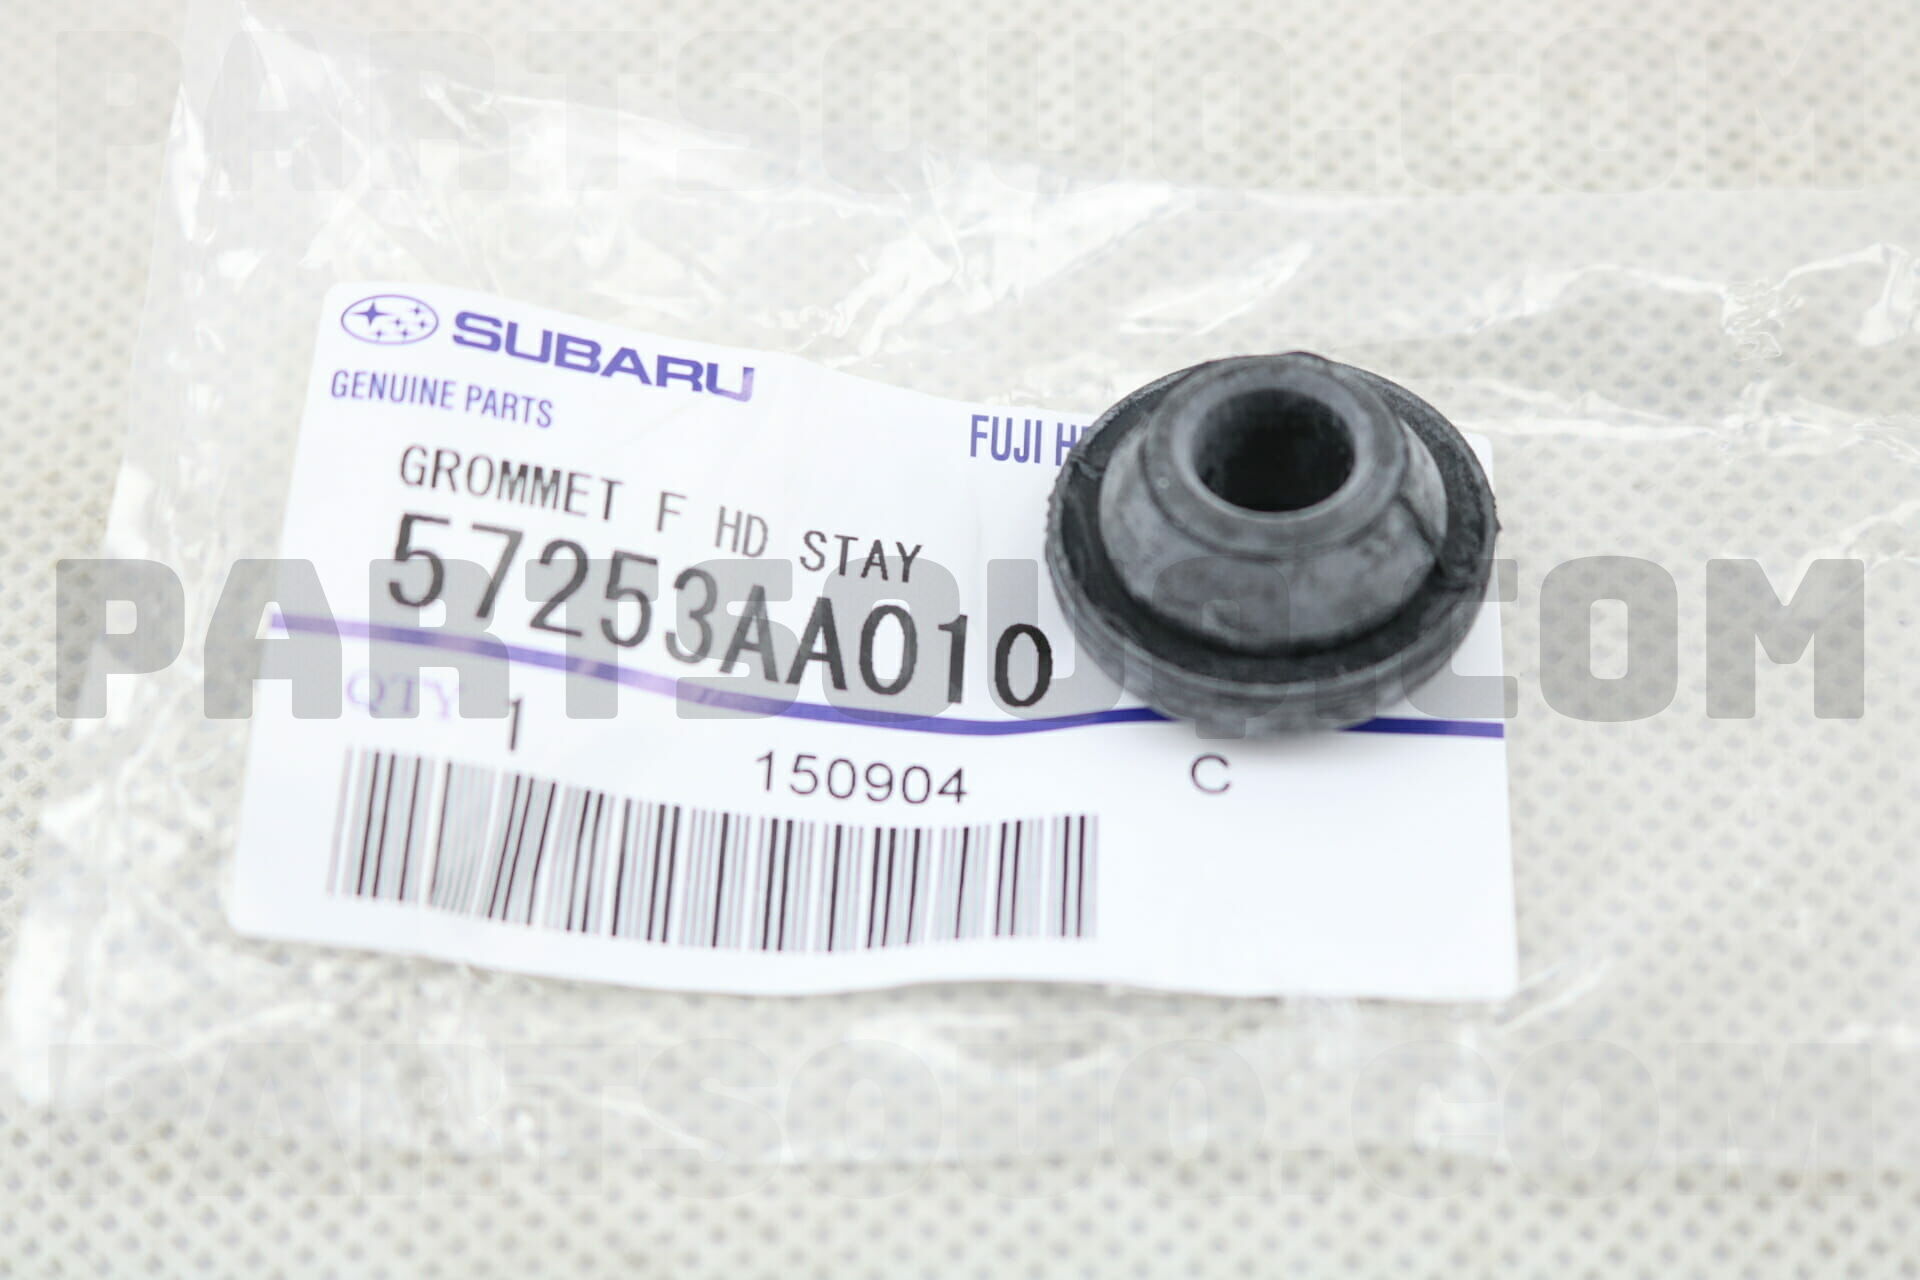 Genuine Subaru Stay Rod Grommet 57253AA010 